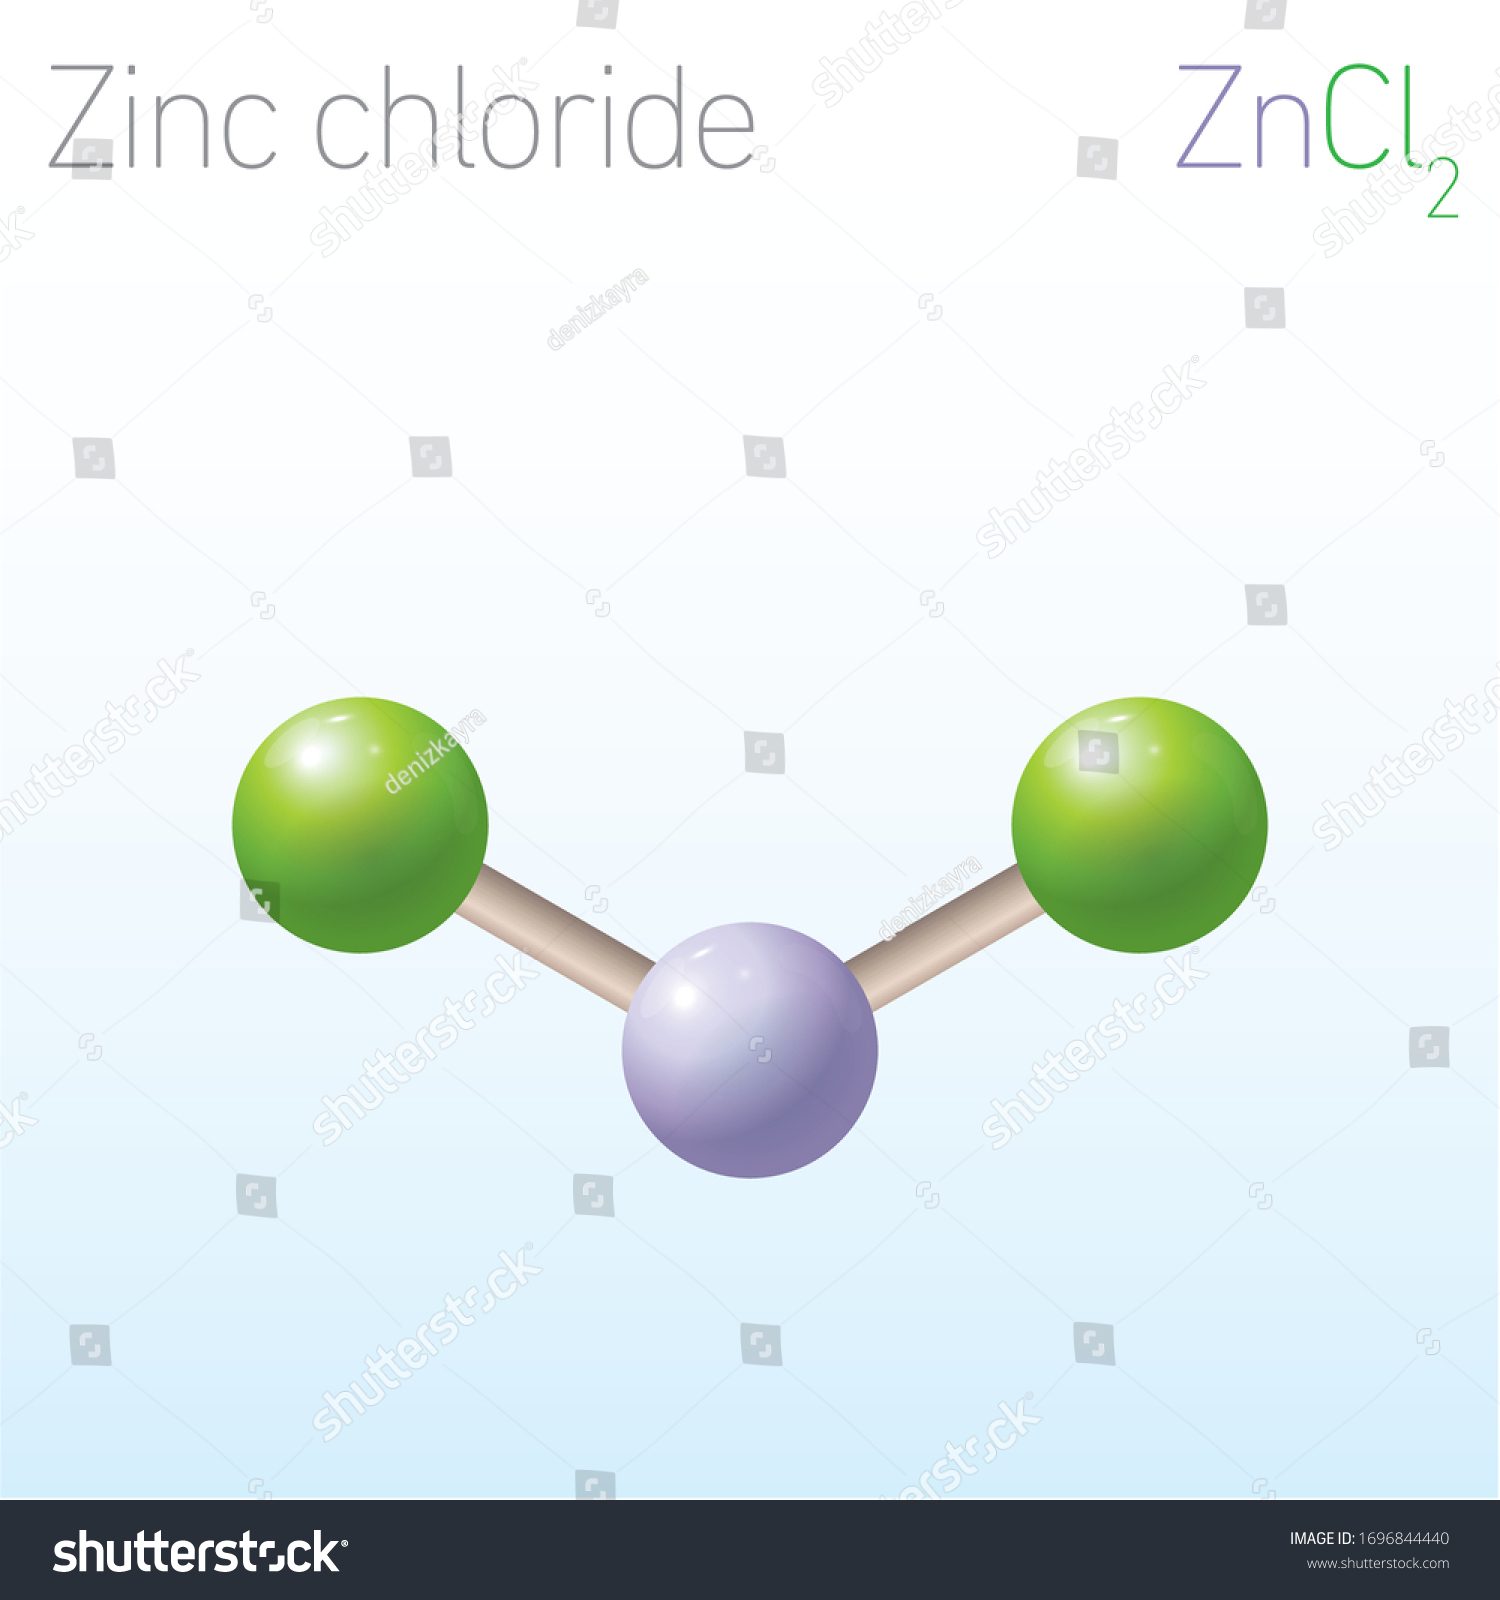 Chloride zinc Zinc chloride